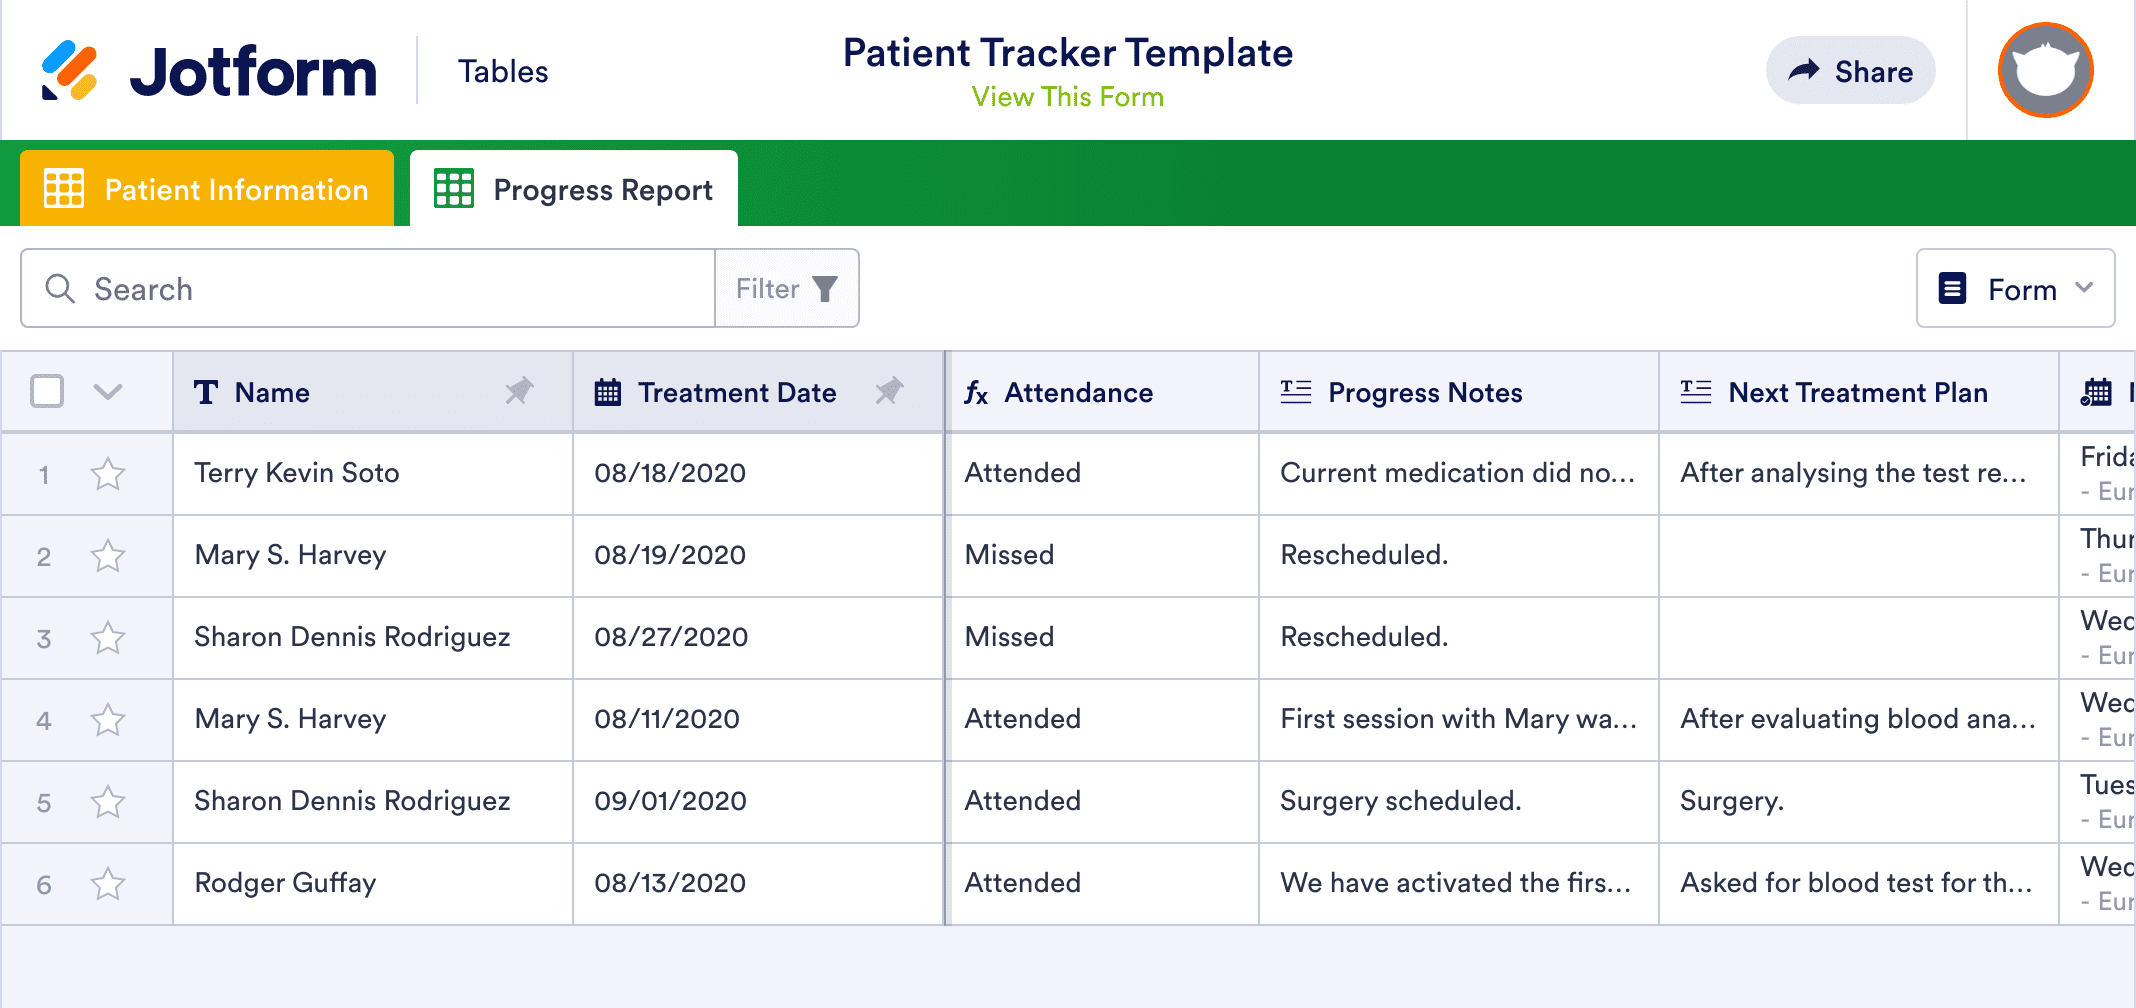 Patient Tracker Template